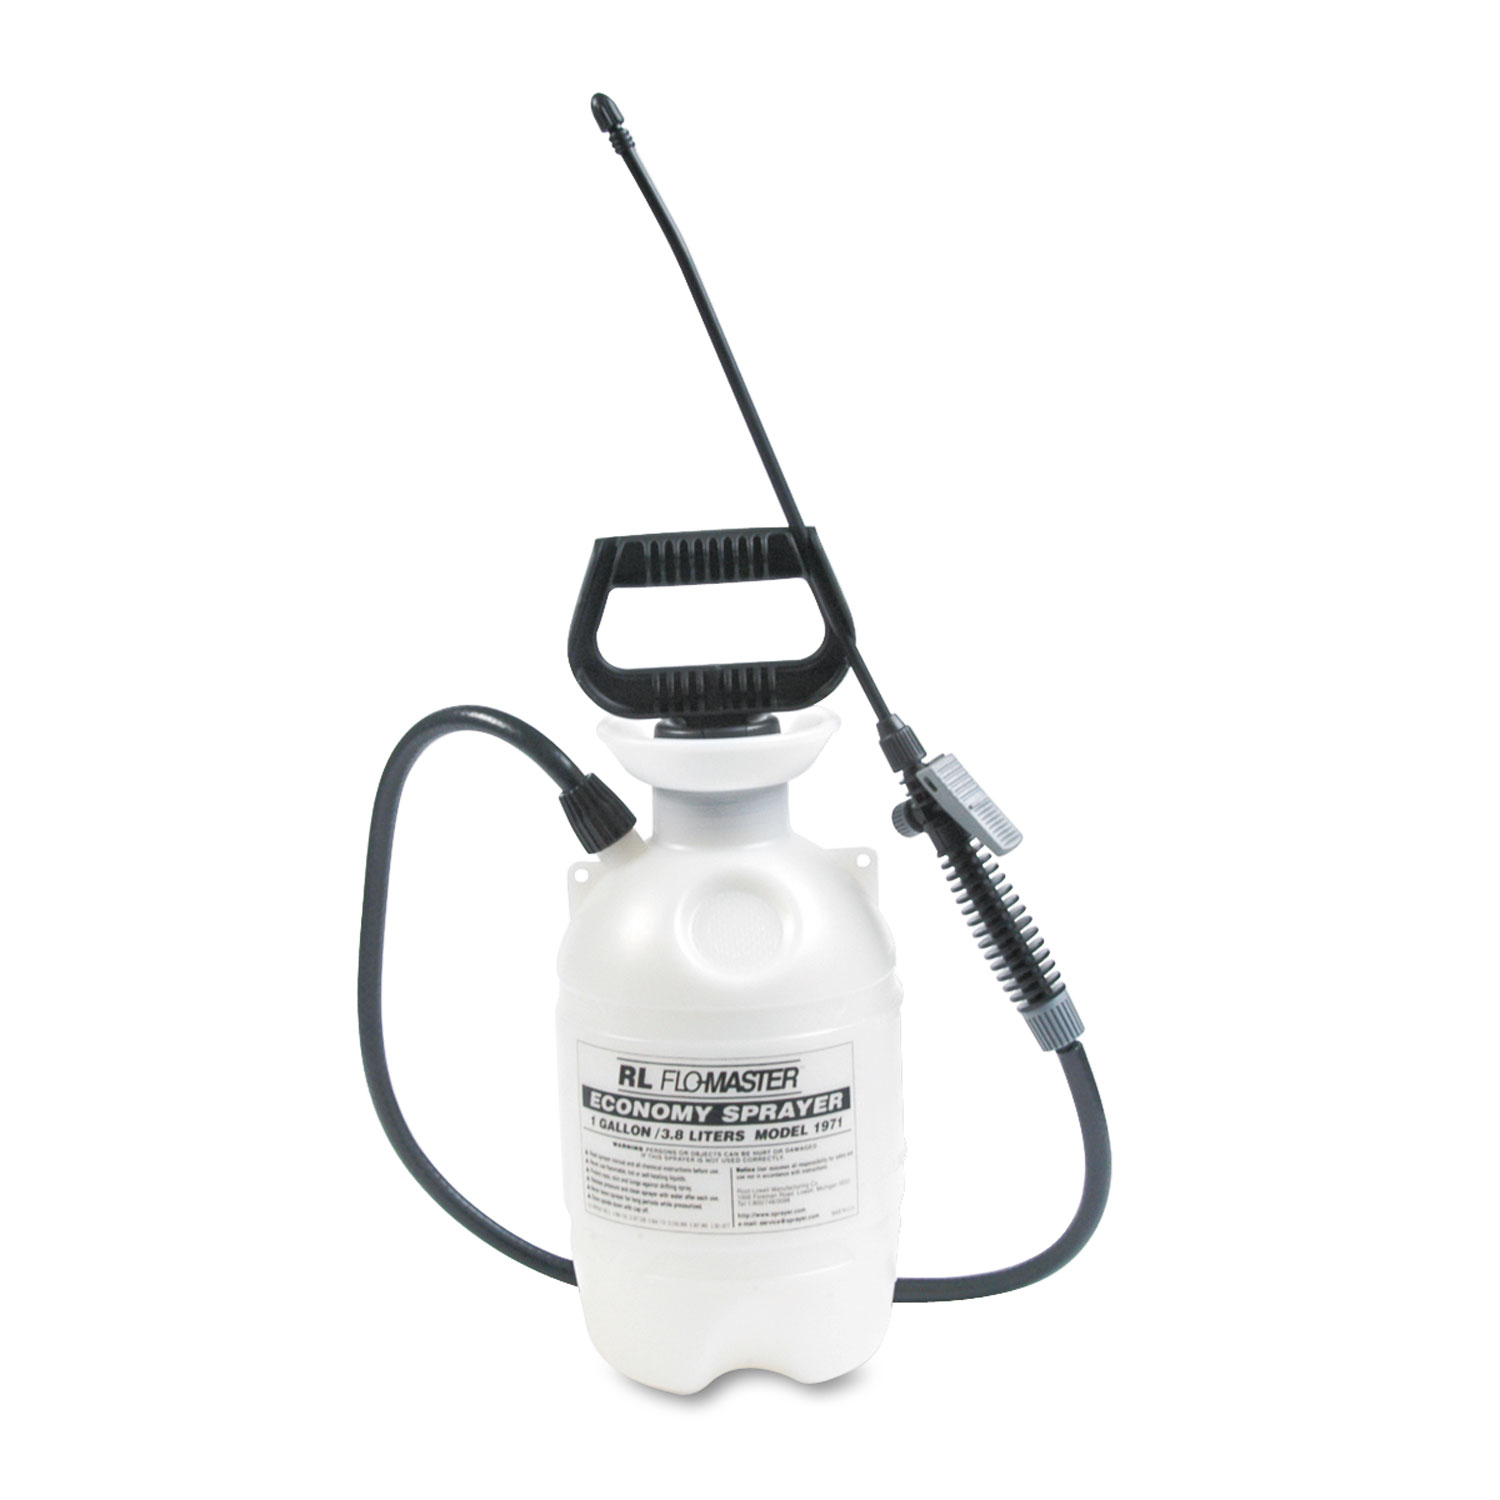 Standard Industrial Tank Sprayer with Adjustable Nozzle, 1 Gallon Capacity